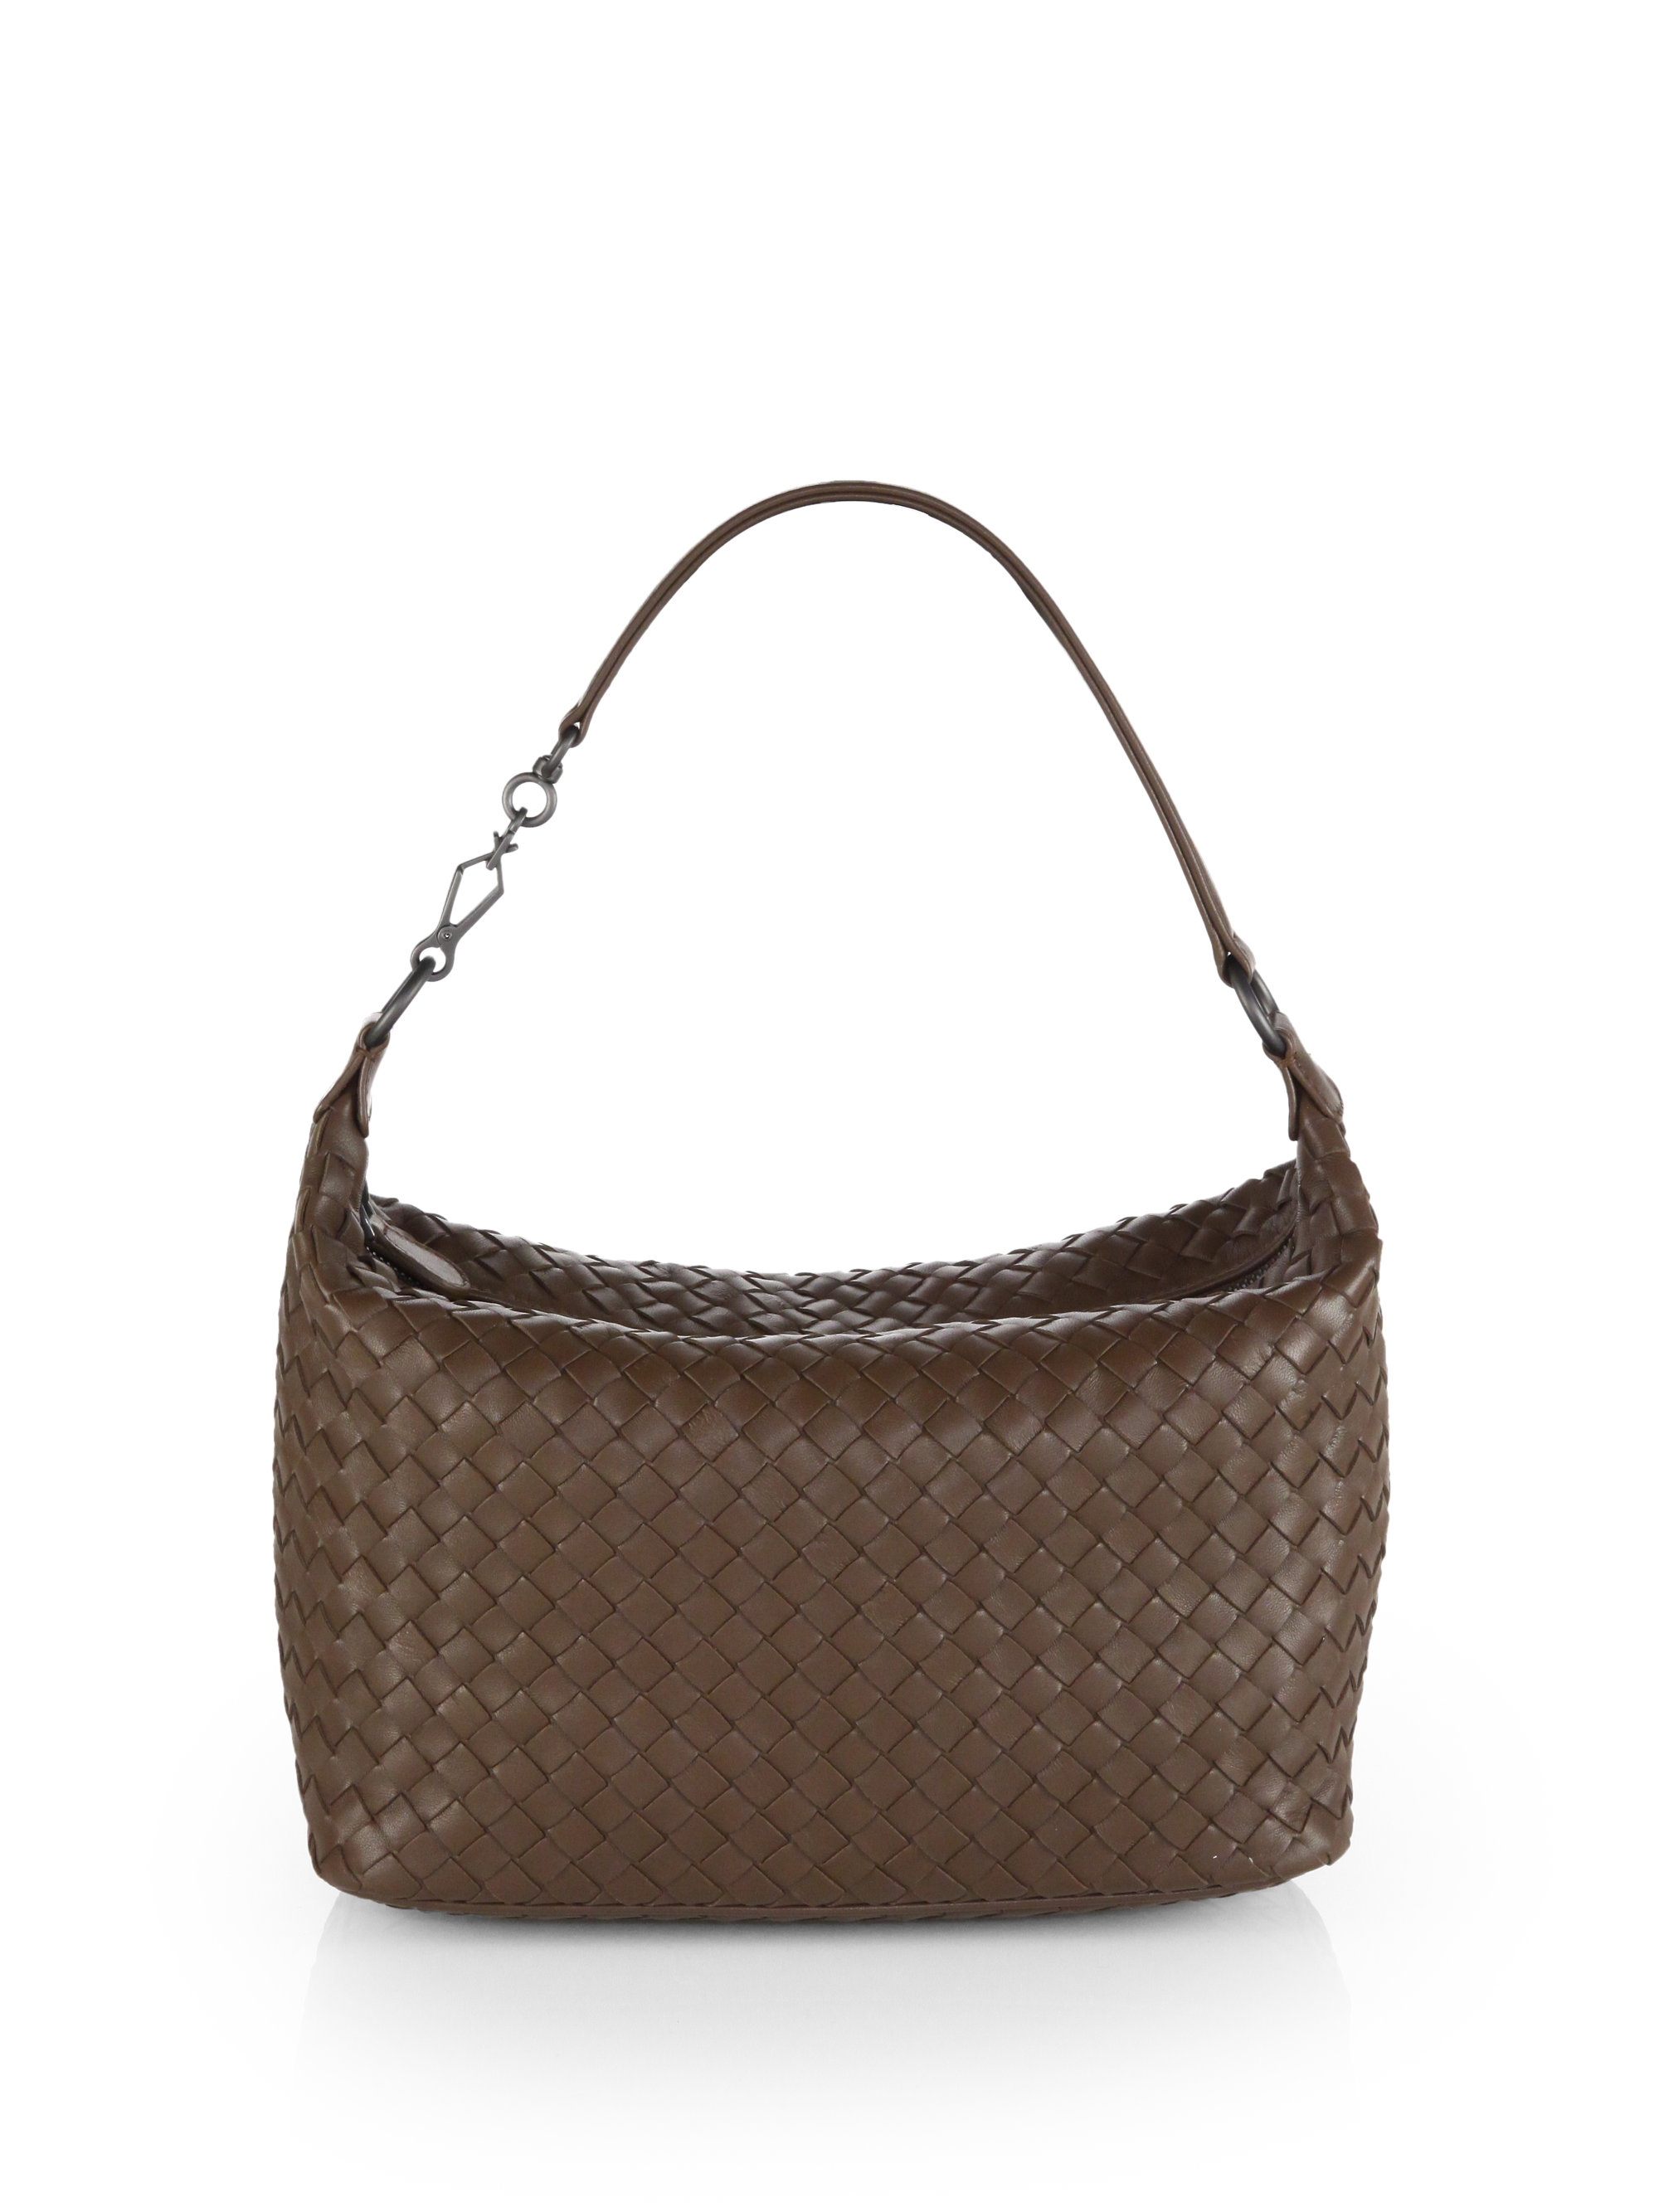 Bottega Veneta Woven Leather Small Shoulder Bag in Brown (CHOCOLATE) | Lyst